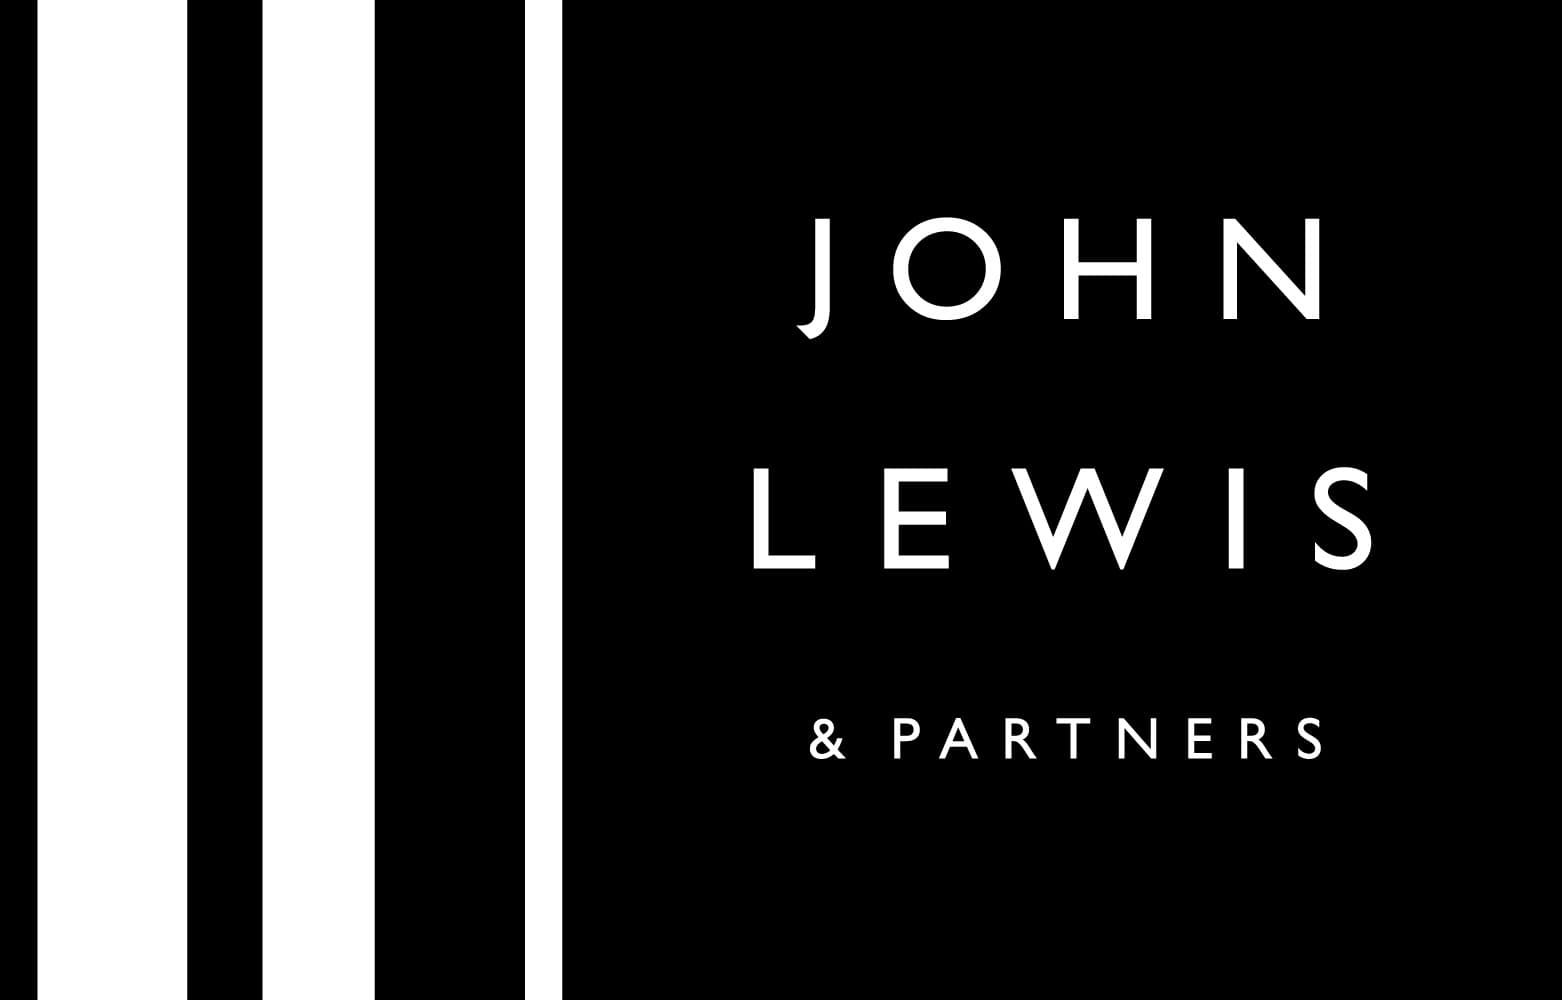 John-lewis-and-partners-logo.jpg